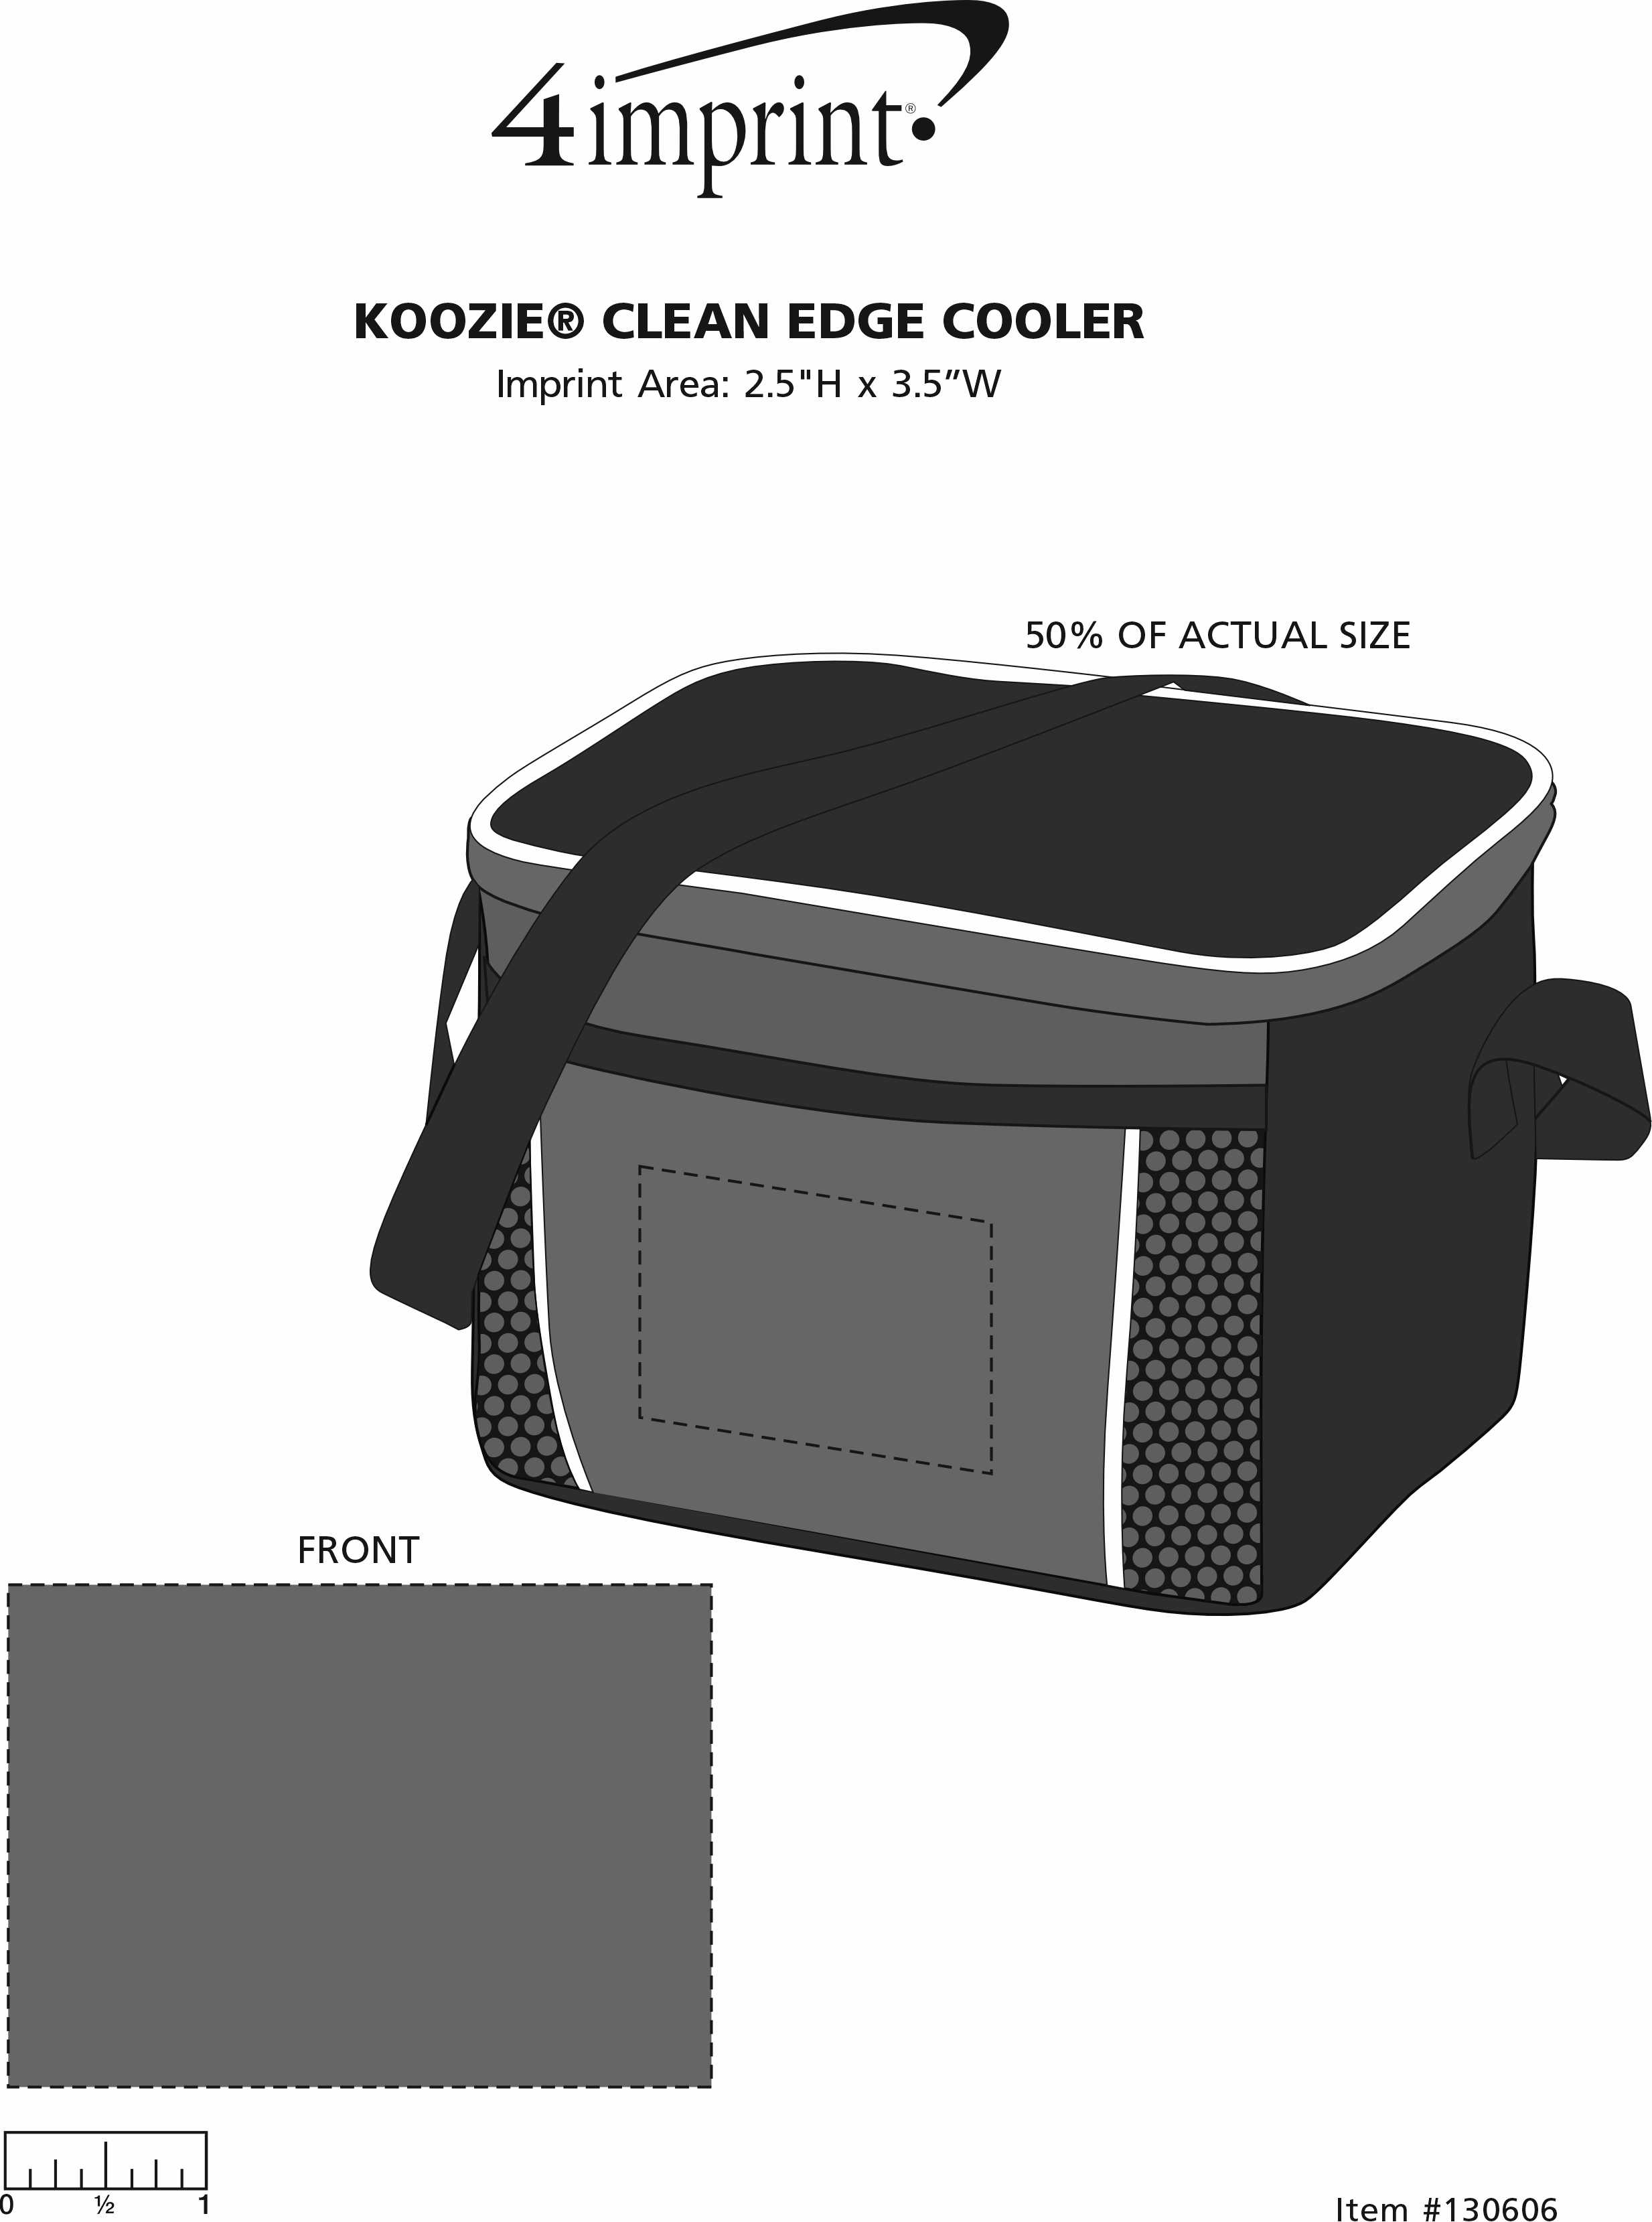 Imprint Area of Koozie® Clean Edge Kooler